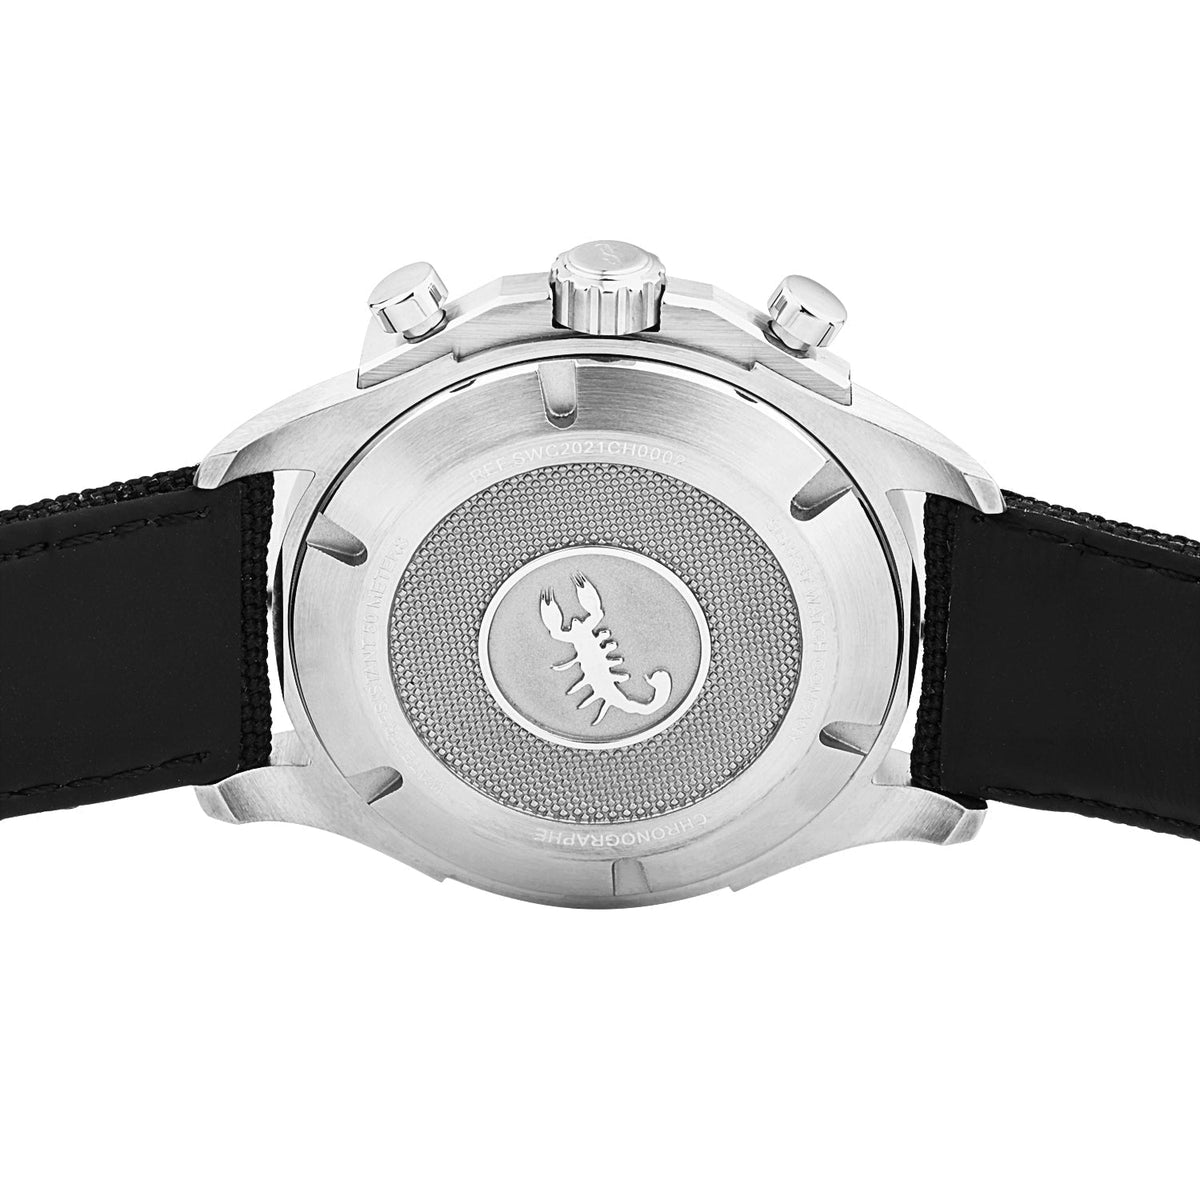 Serket Chronographe-Onyx Chronograph Watch | Serket Watch Company